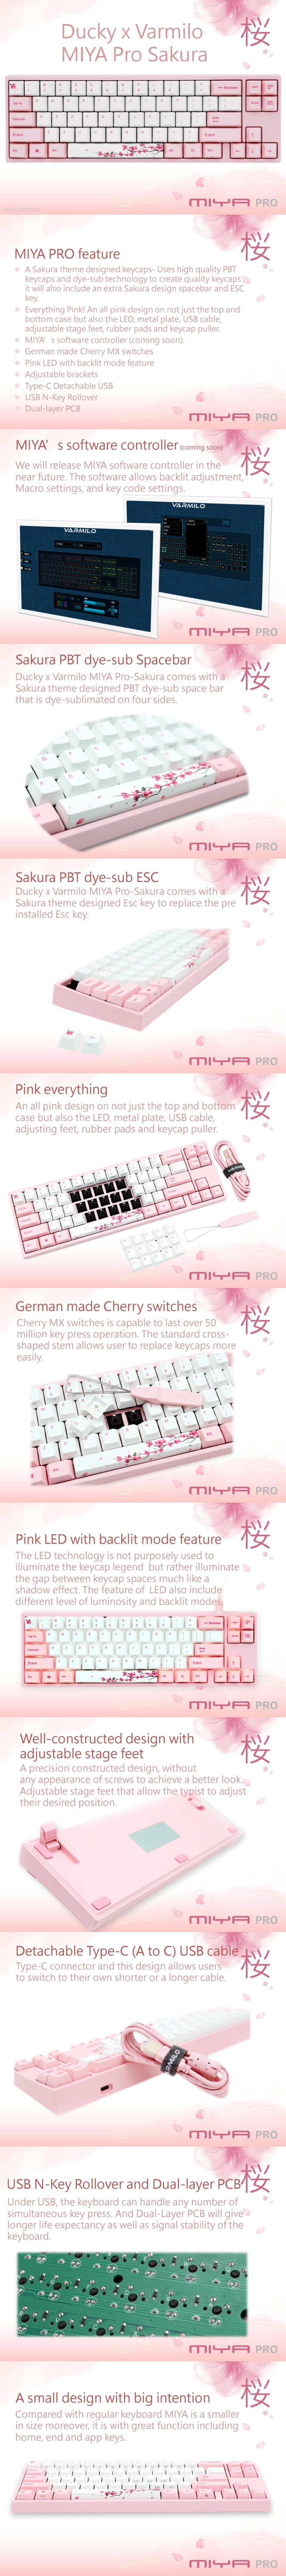 Ducky Miya Pro Sakura Mechanical Keyboard with Cherry MX Blue Key Switches